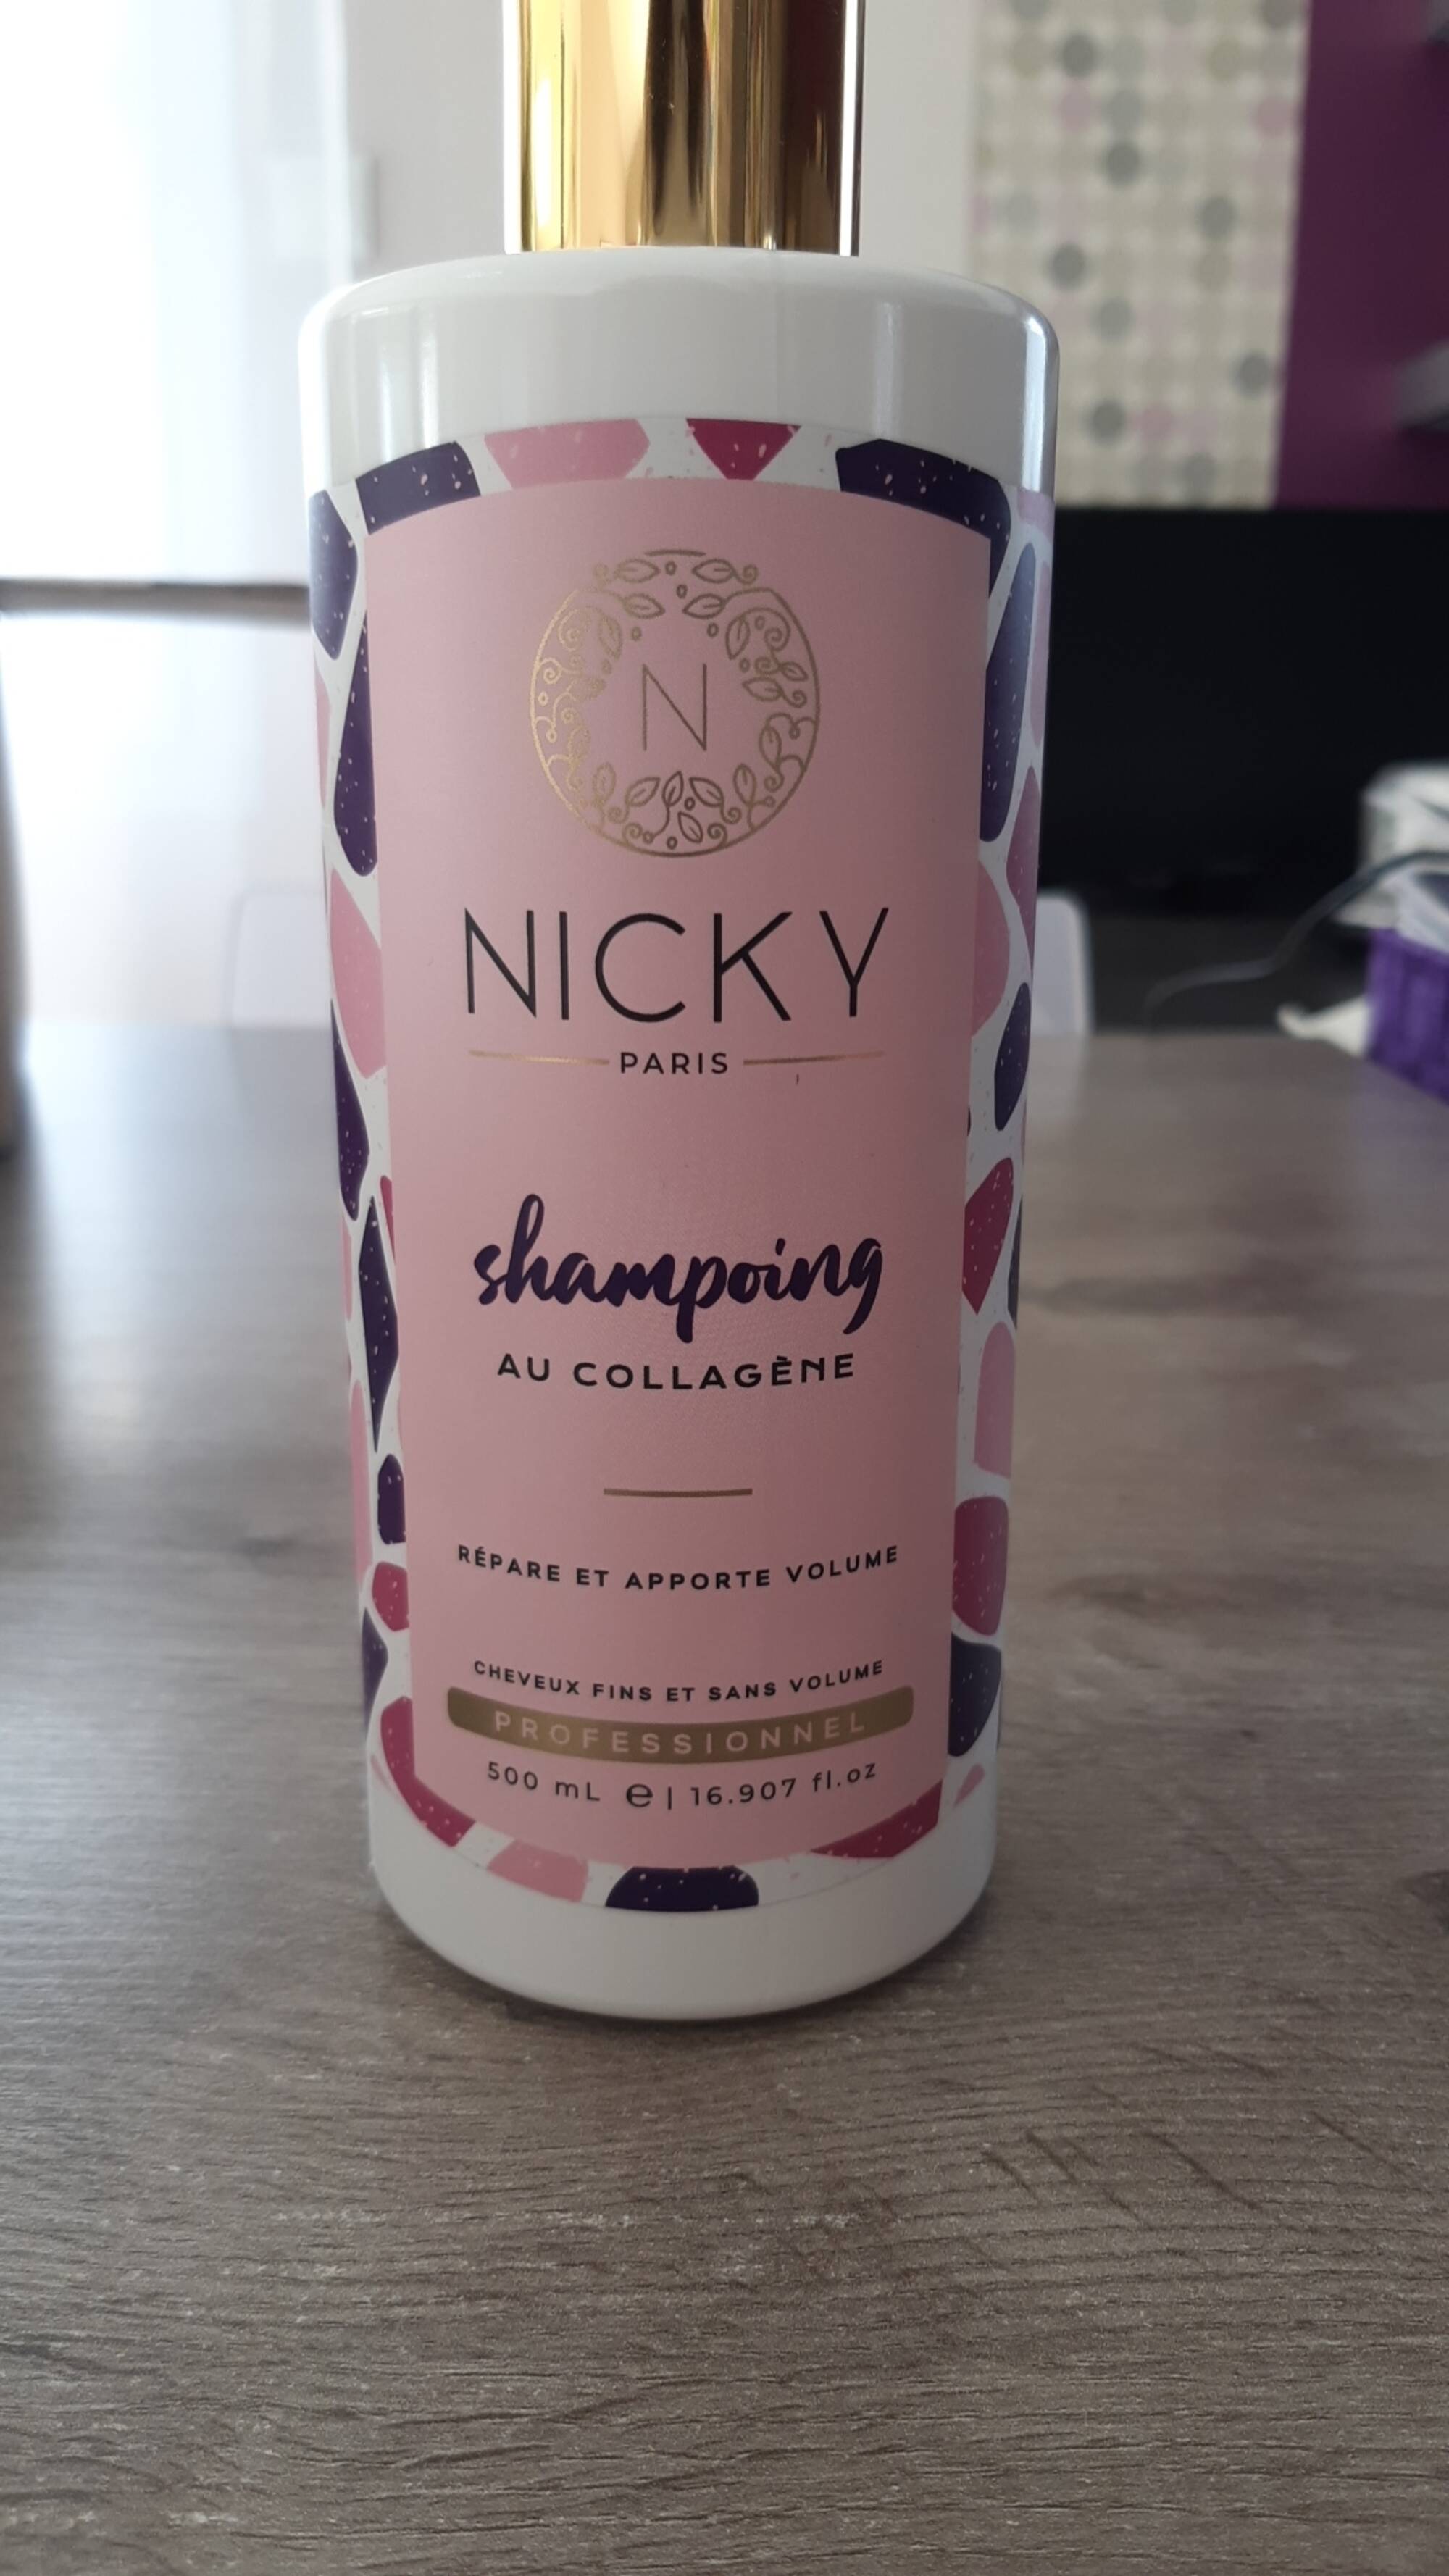 NICKY PARIS - Shampoing au collagène